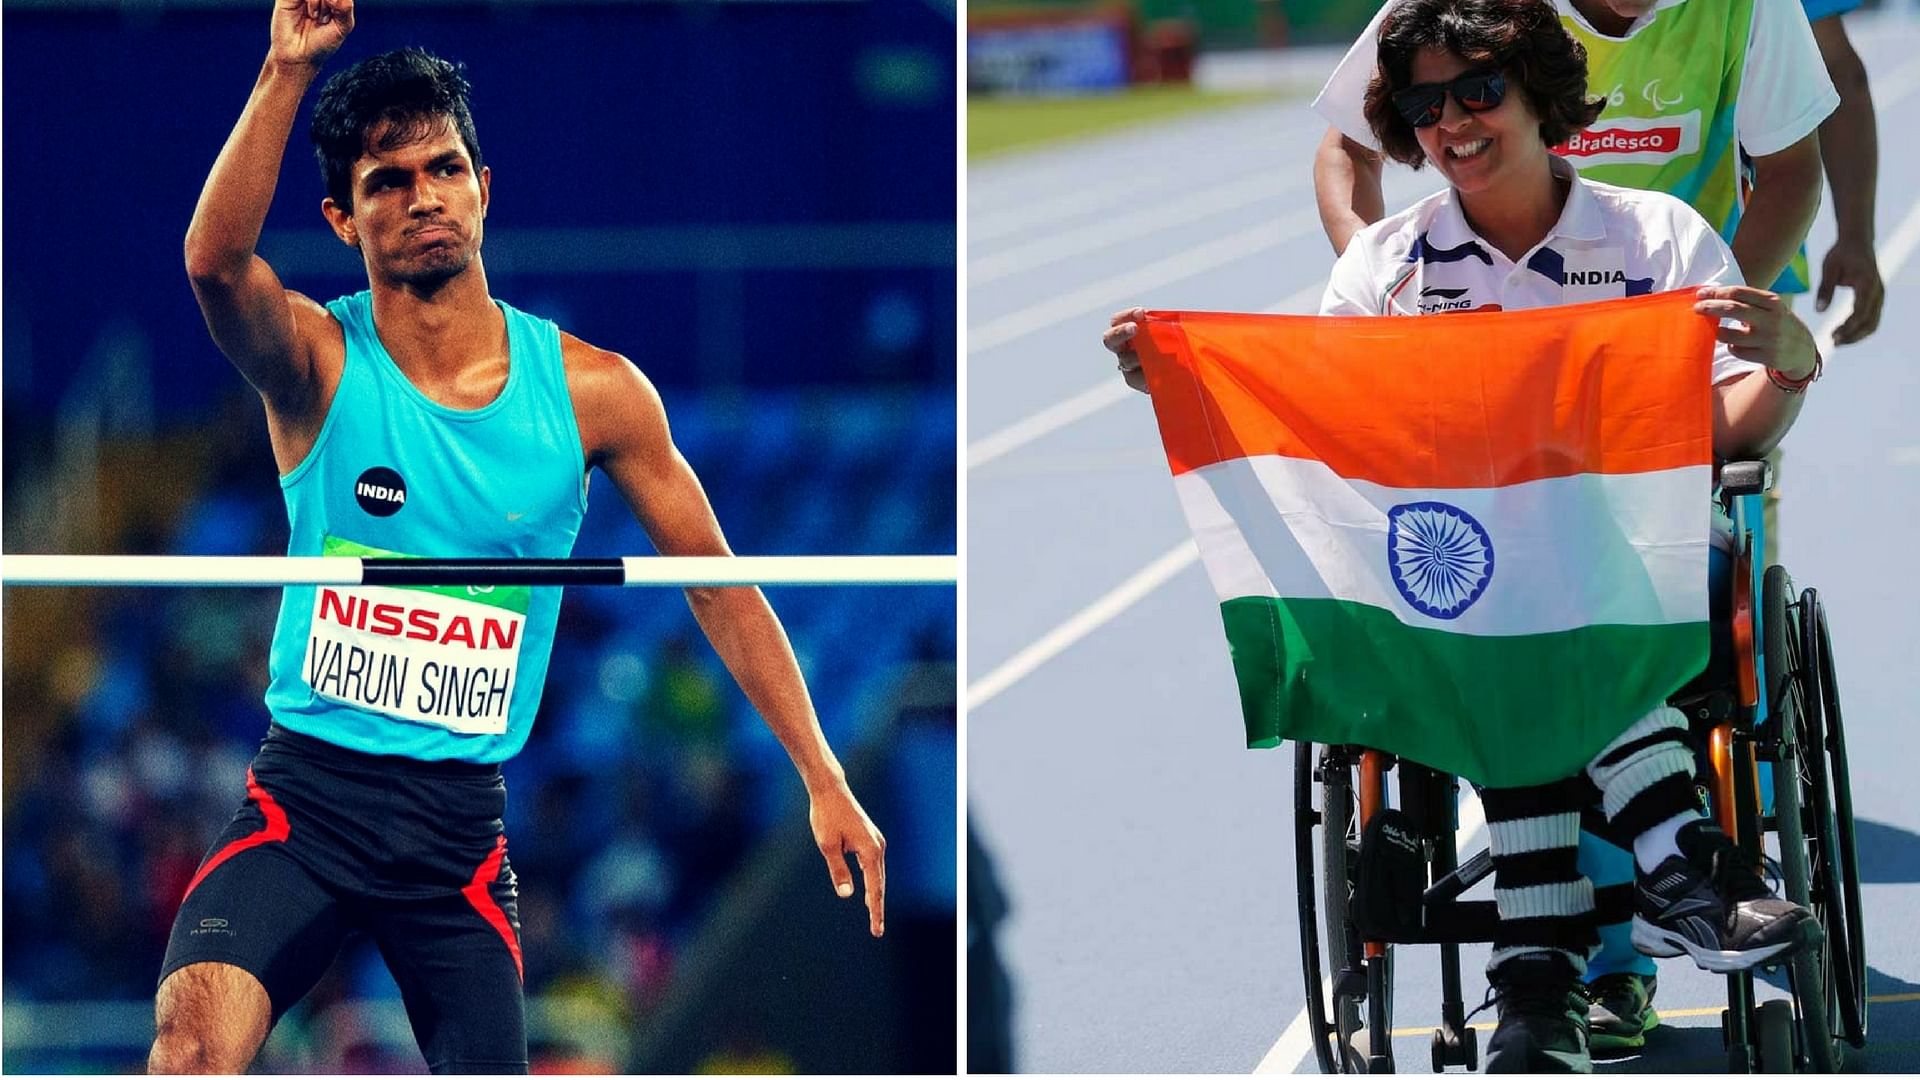 Varun Bhati and Deepa Malik won medals for India at the Paralympics. (Photo: AP)